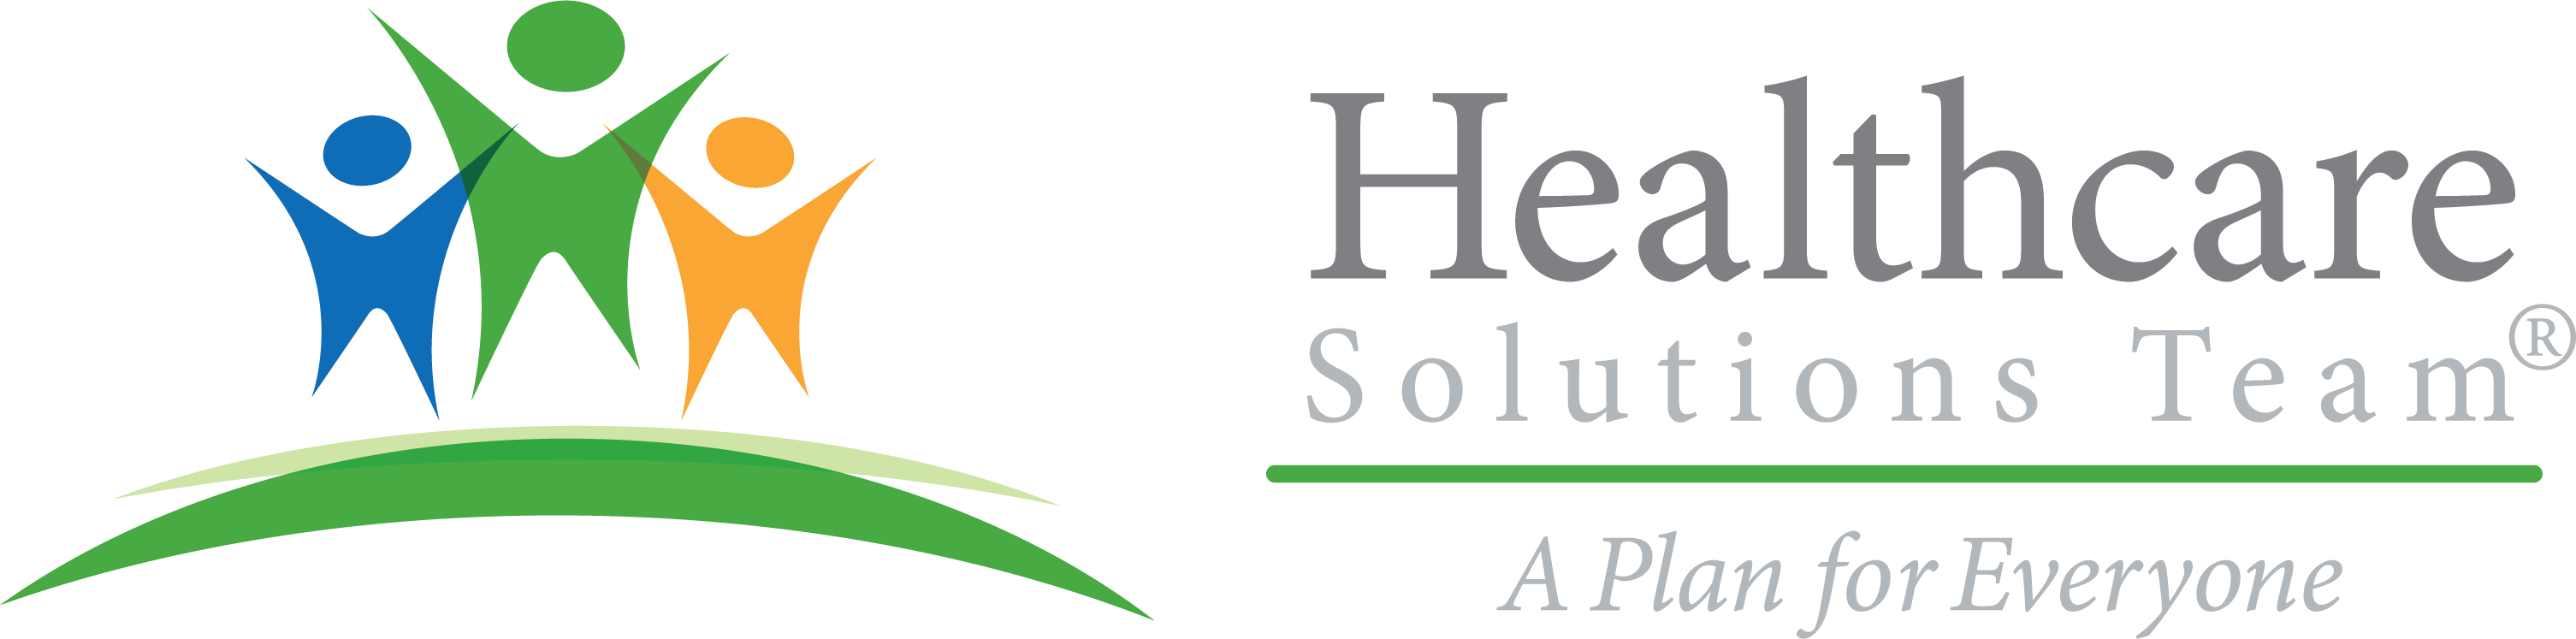 Healthcare Solutions Team HST Logo